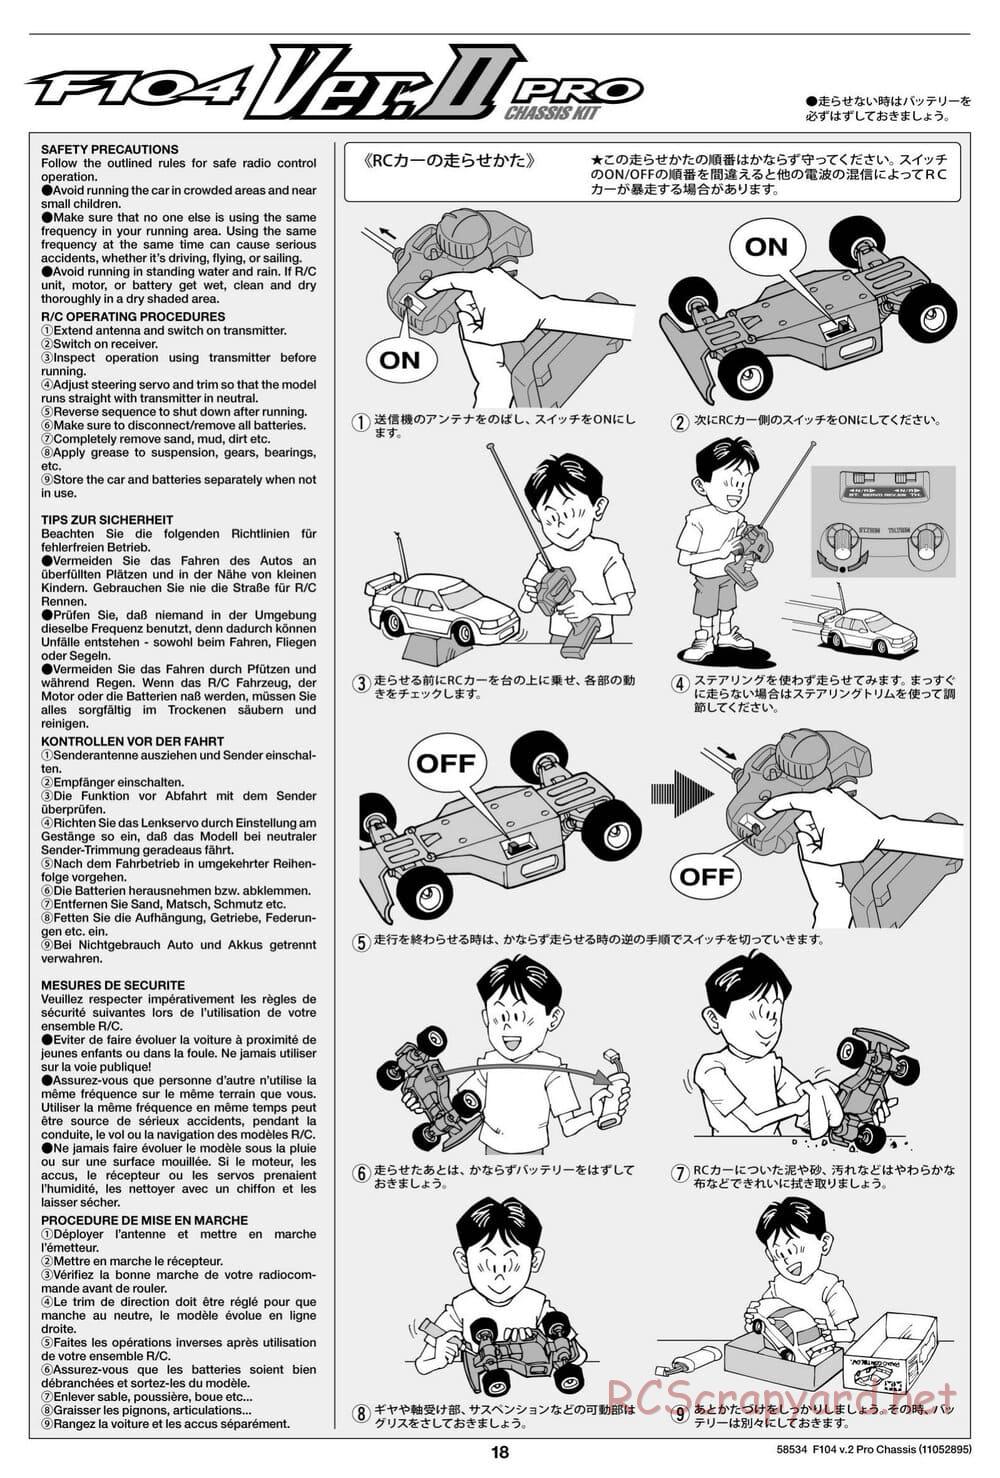 Tamiya - F104 Ver.II PRO Chassis - Manual - Page 18